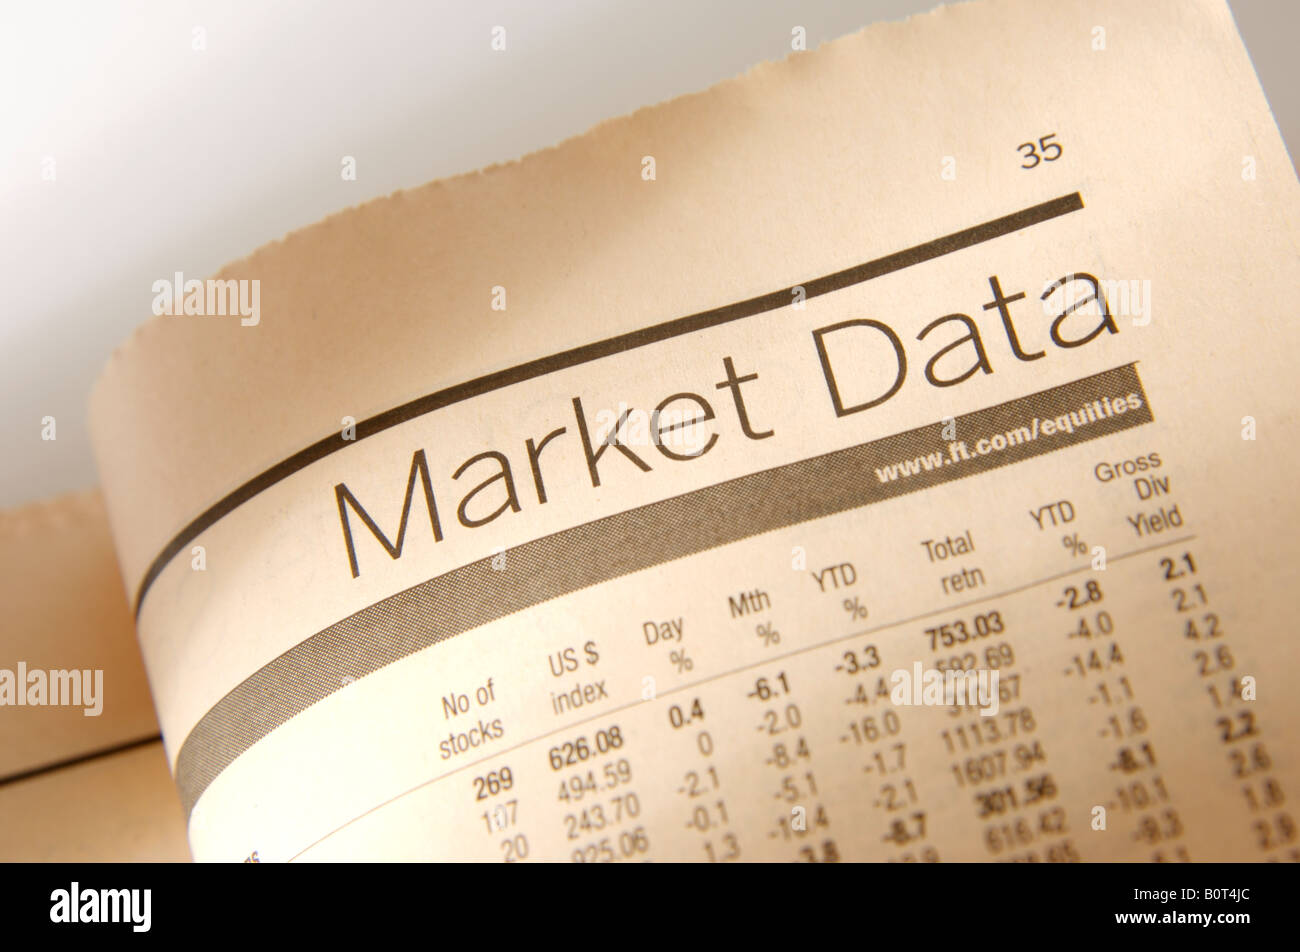 Market data table Stock Photo